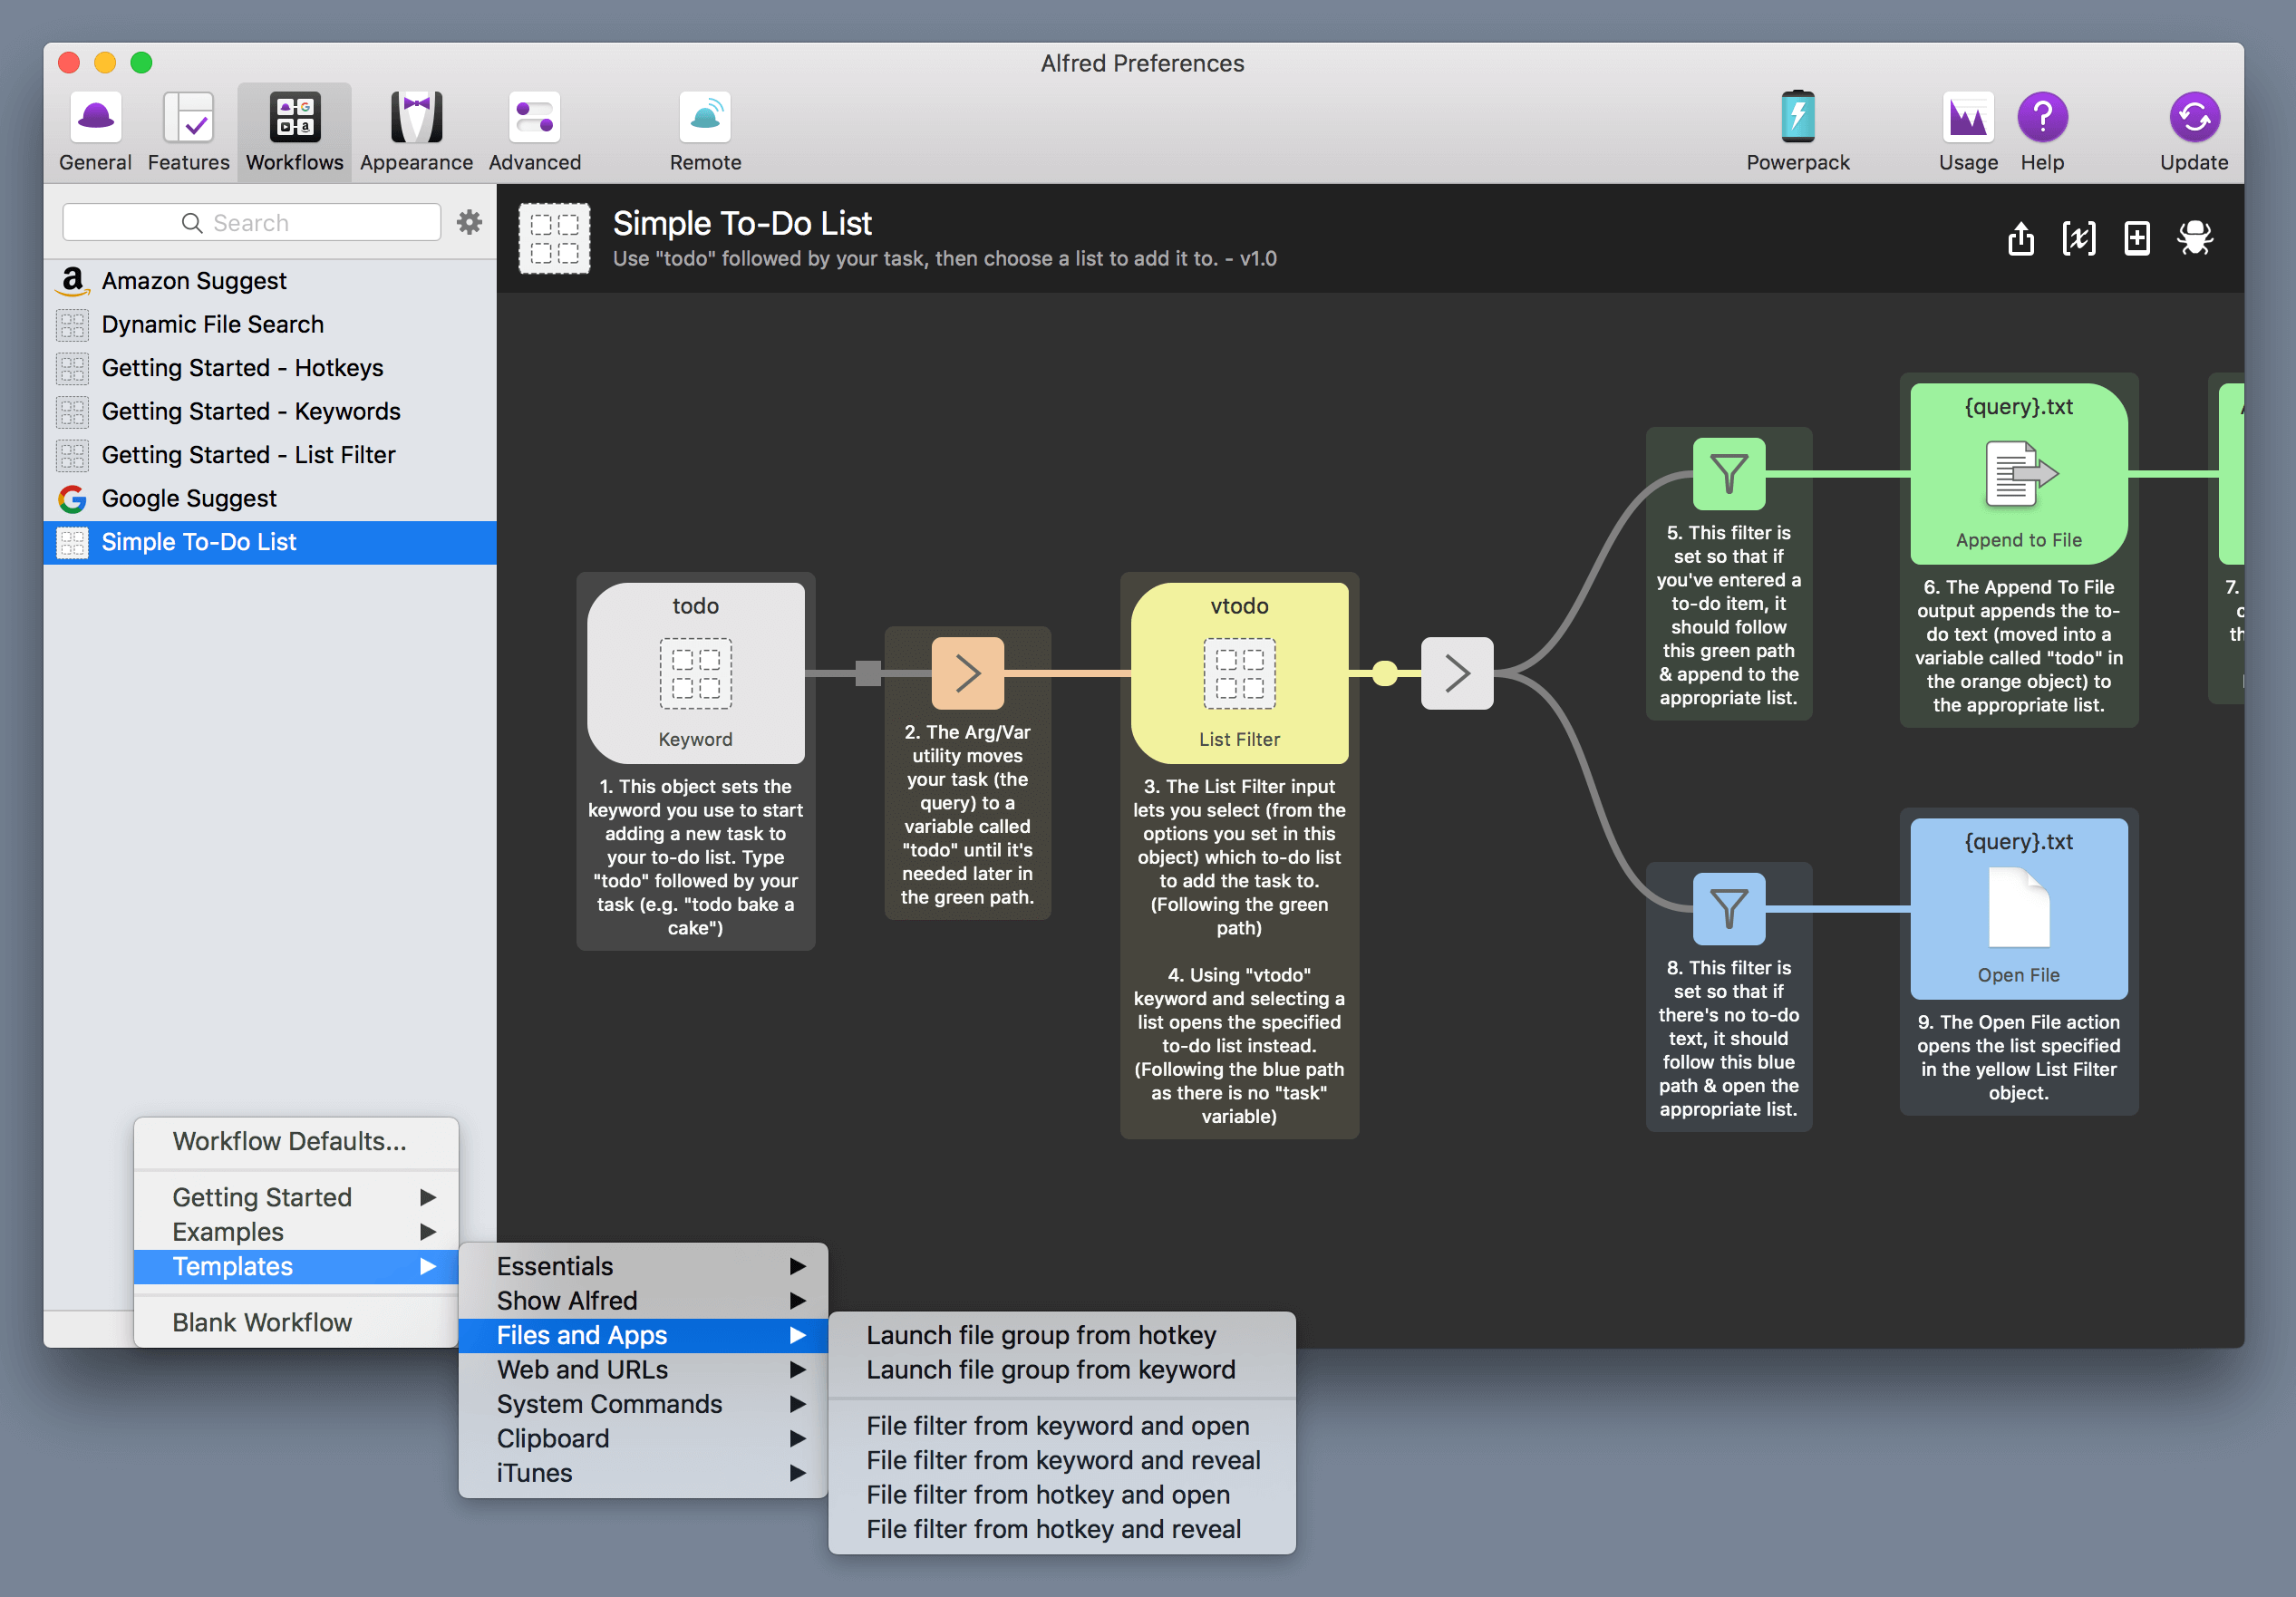 Workflow templates